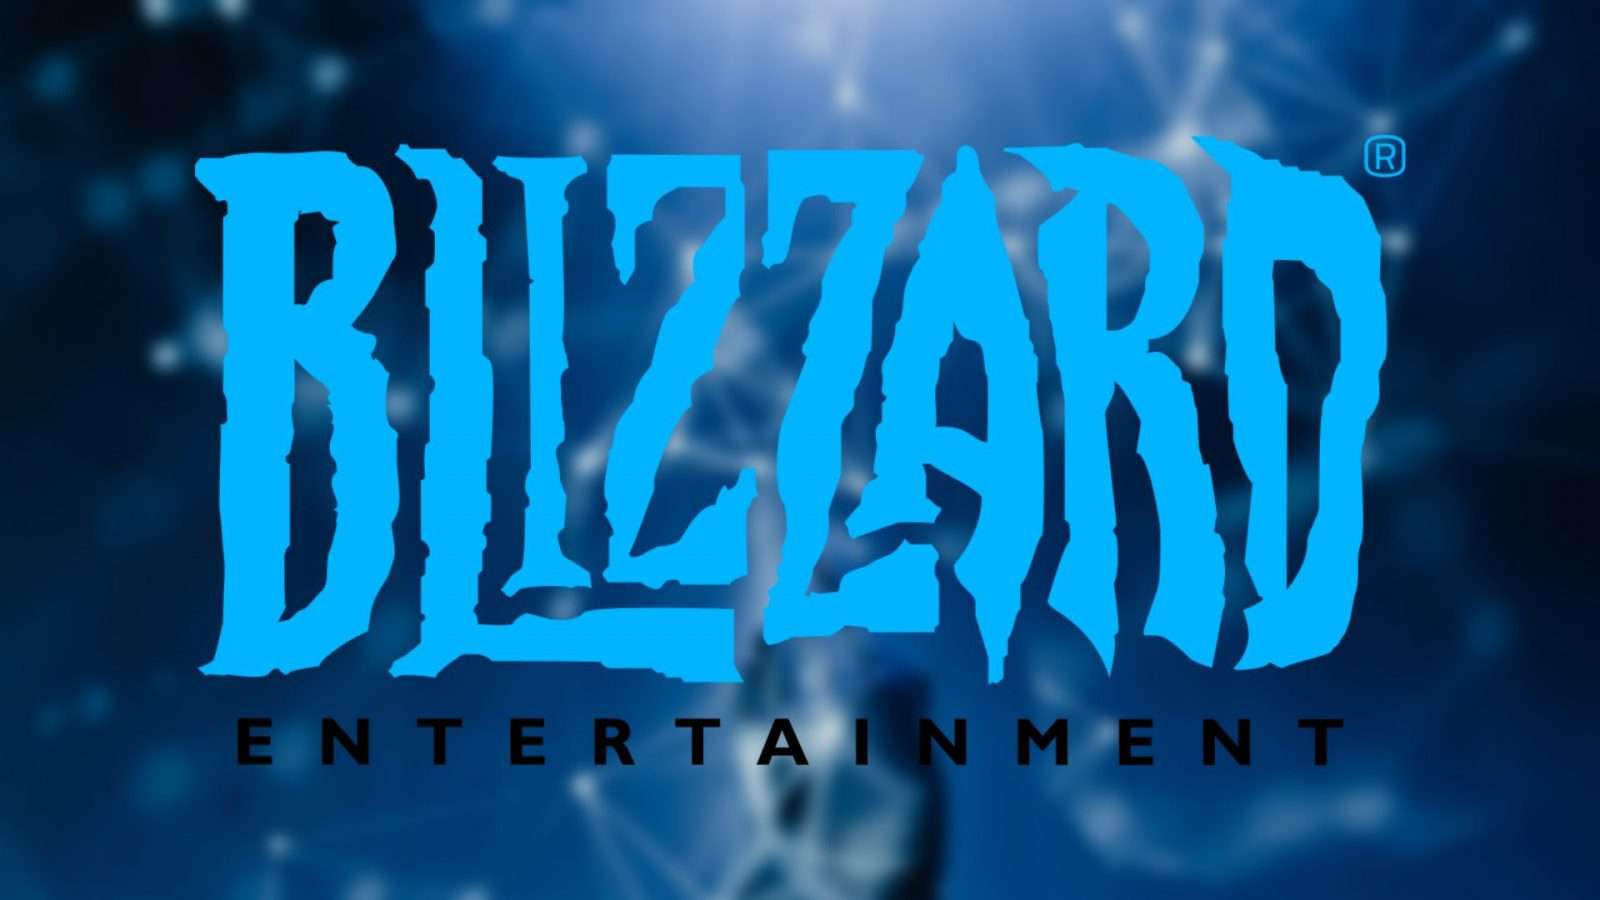 blizzard entertainment logo